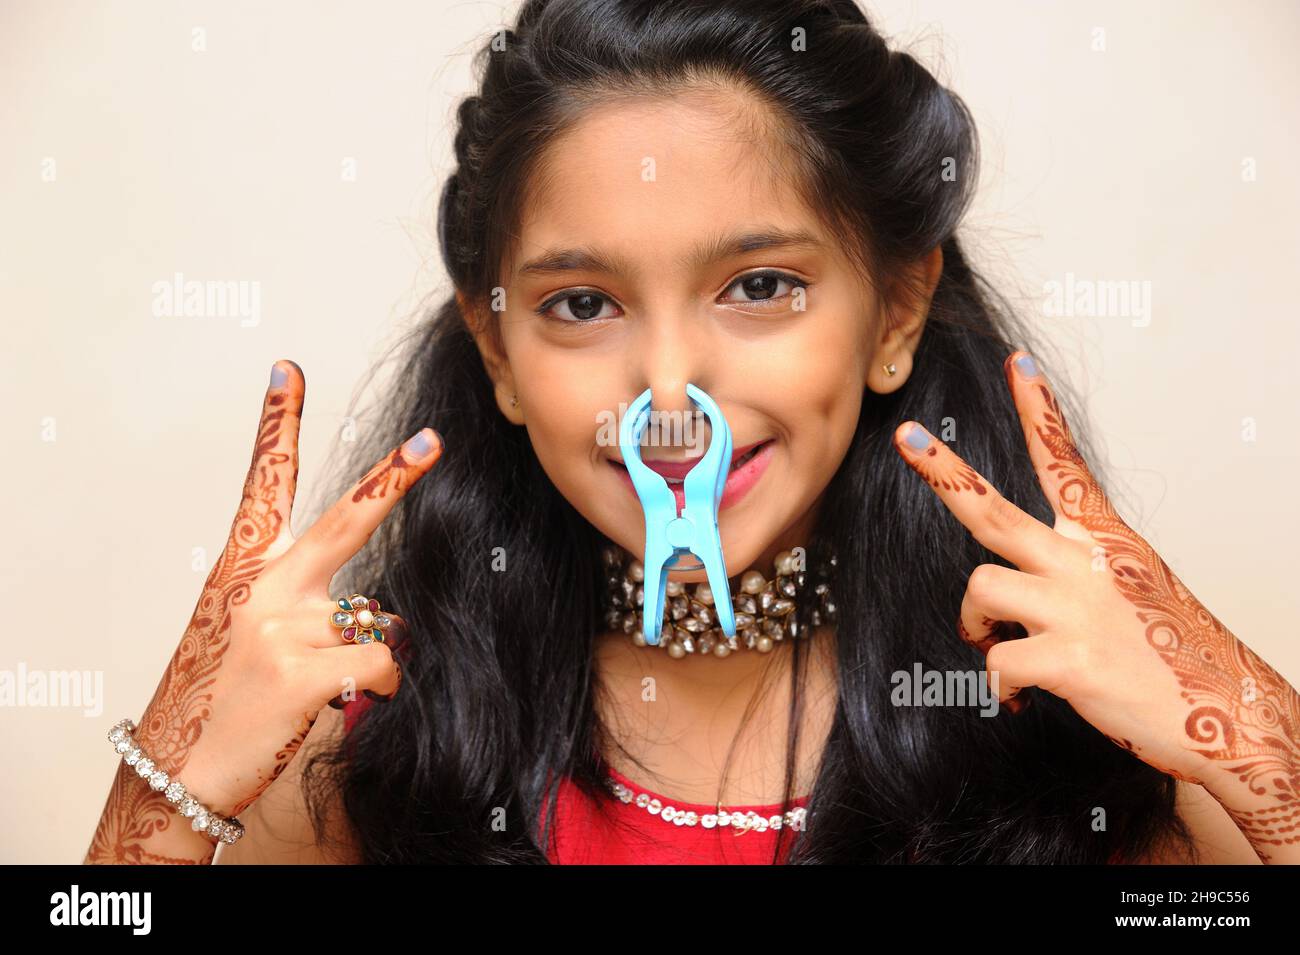 Mumbai Maharashtra India Asia July 24 2021 Portrait Of Indian Teen Eight Years Old Girl With